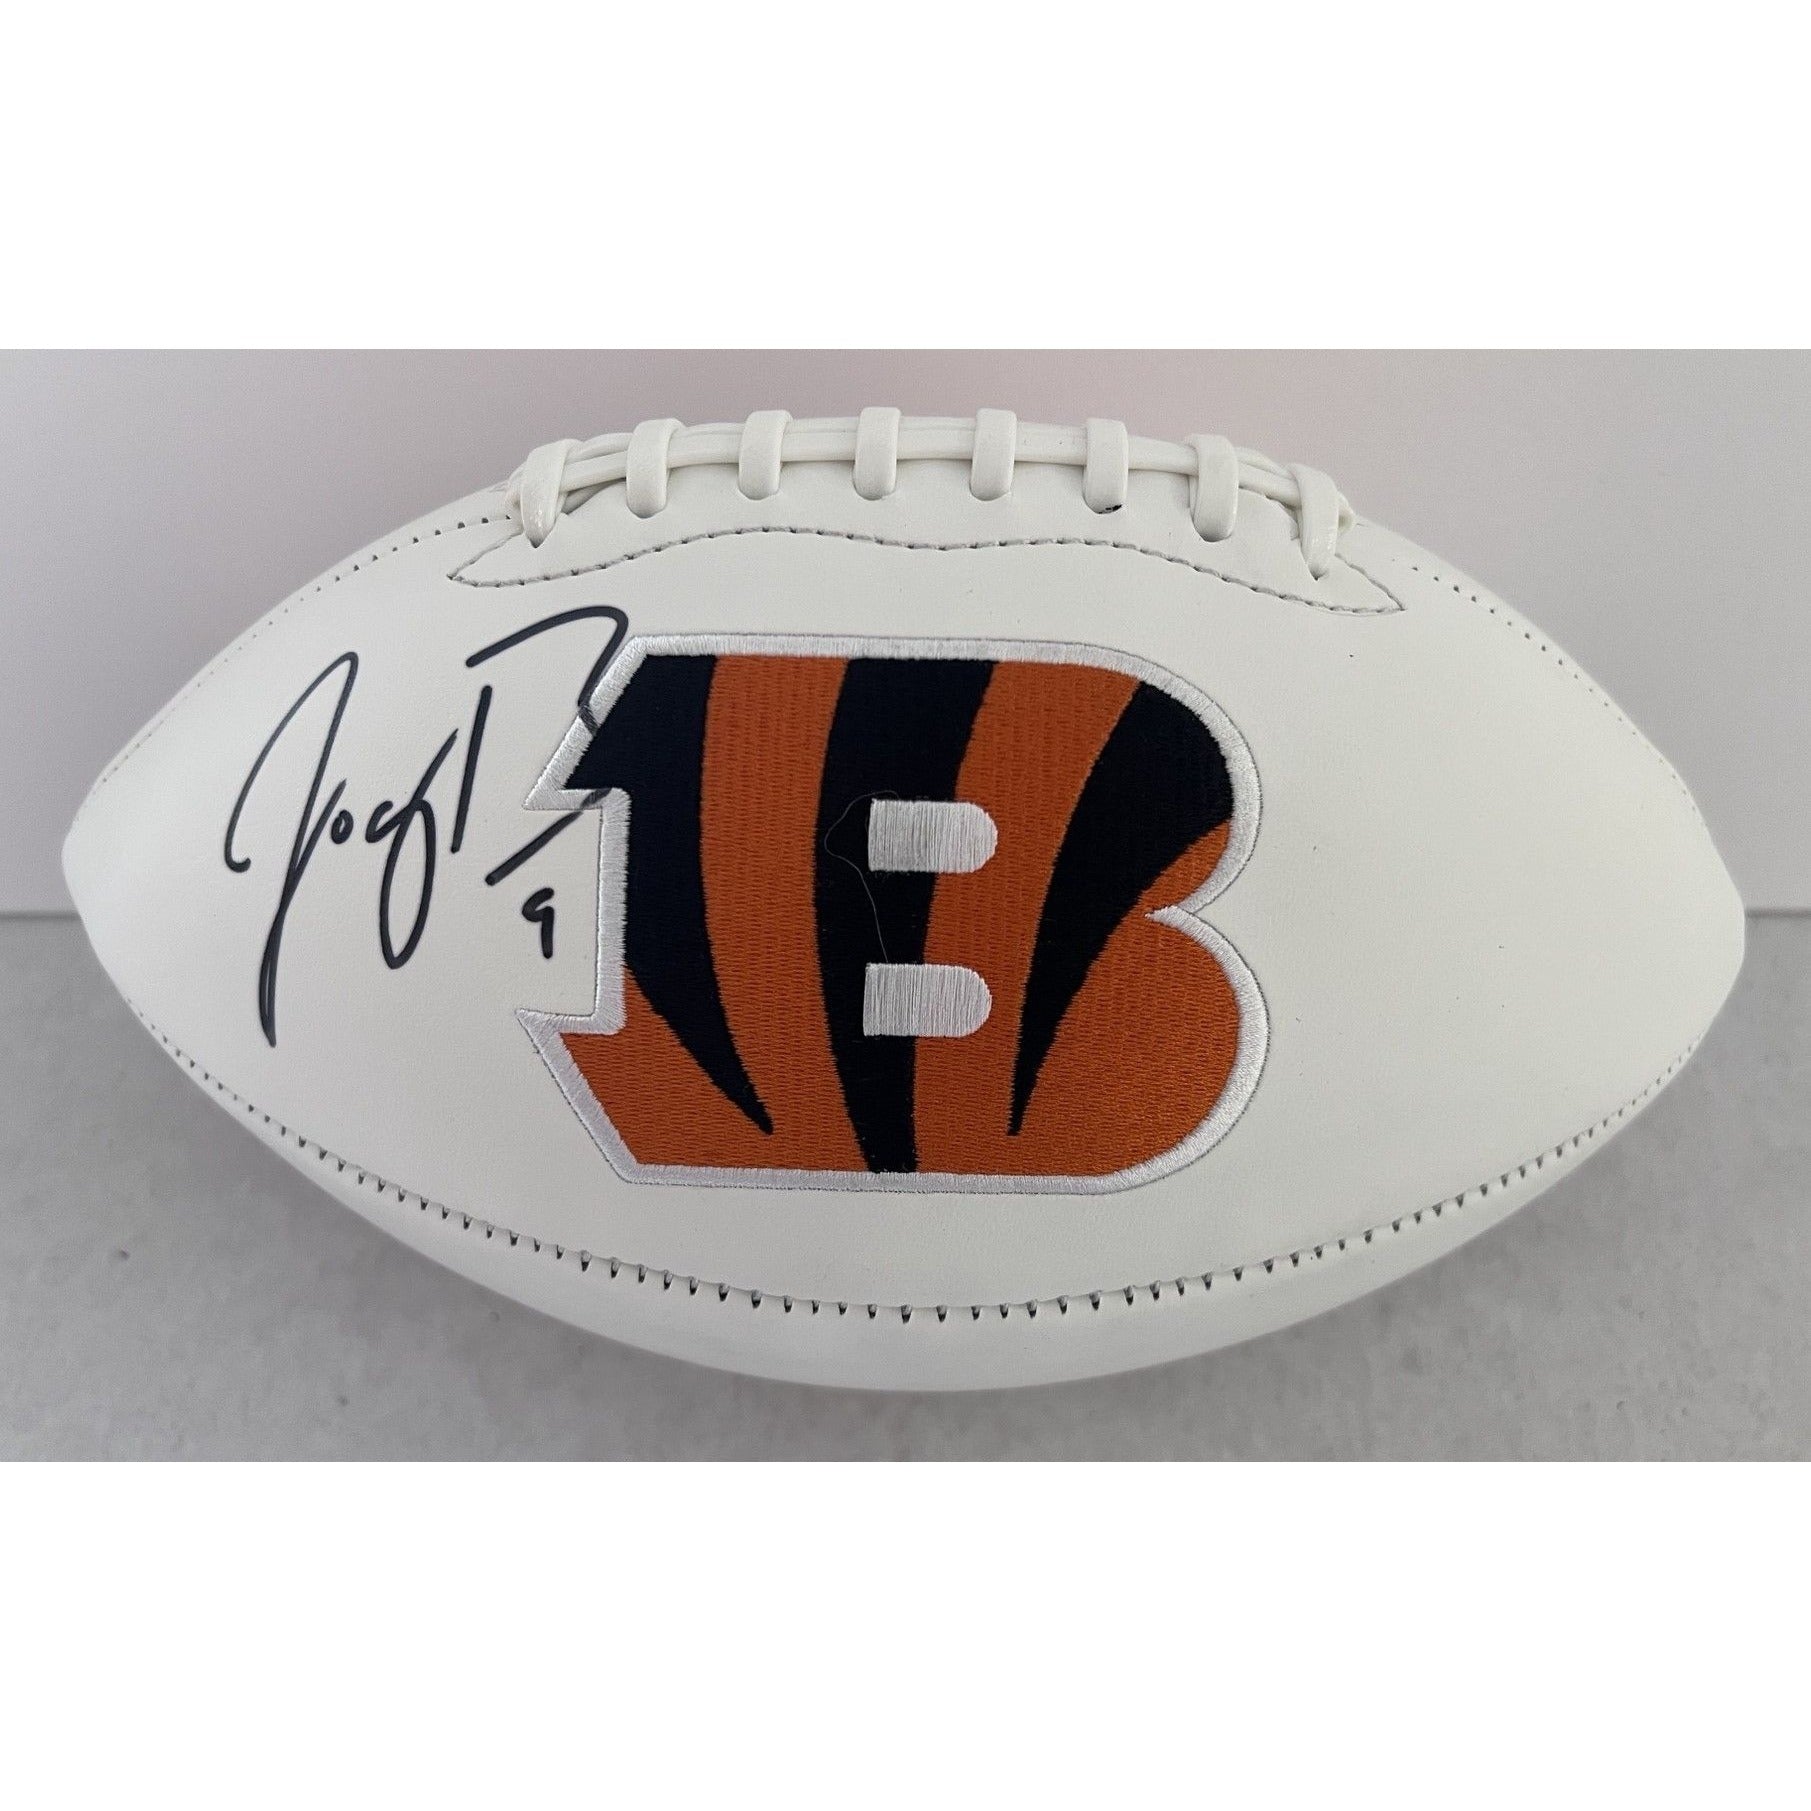 Joe Burrow Cincinnati Bengals full size logo ball signed with proof